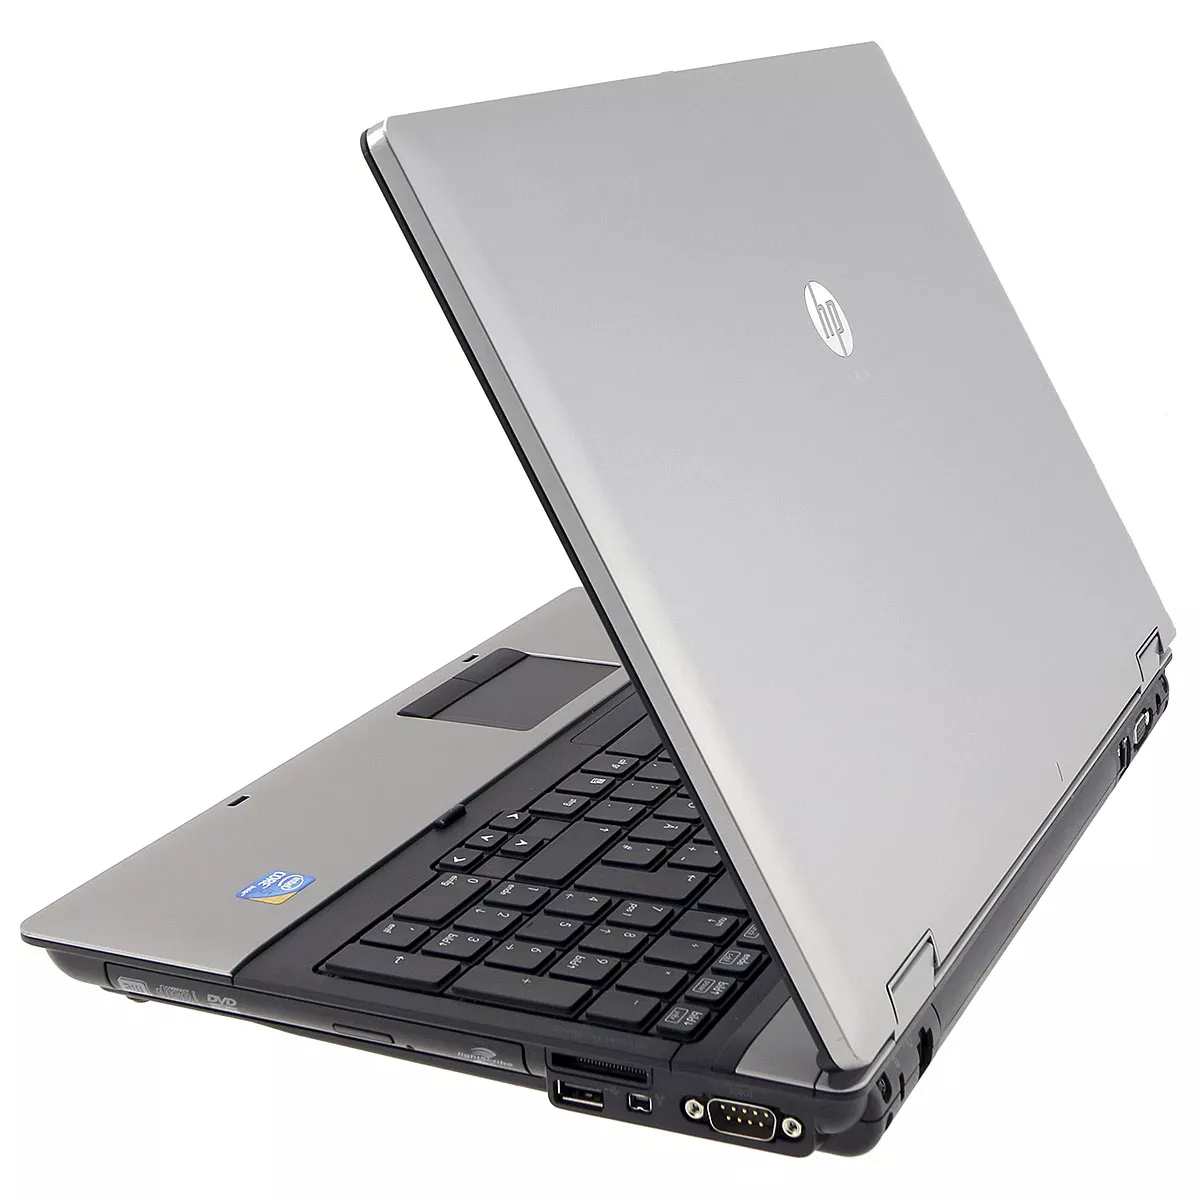 HP ProBook 6550b Core i5 520M 2,4 GHz B-Ware